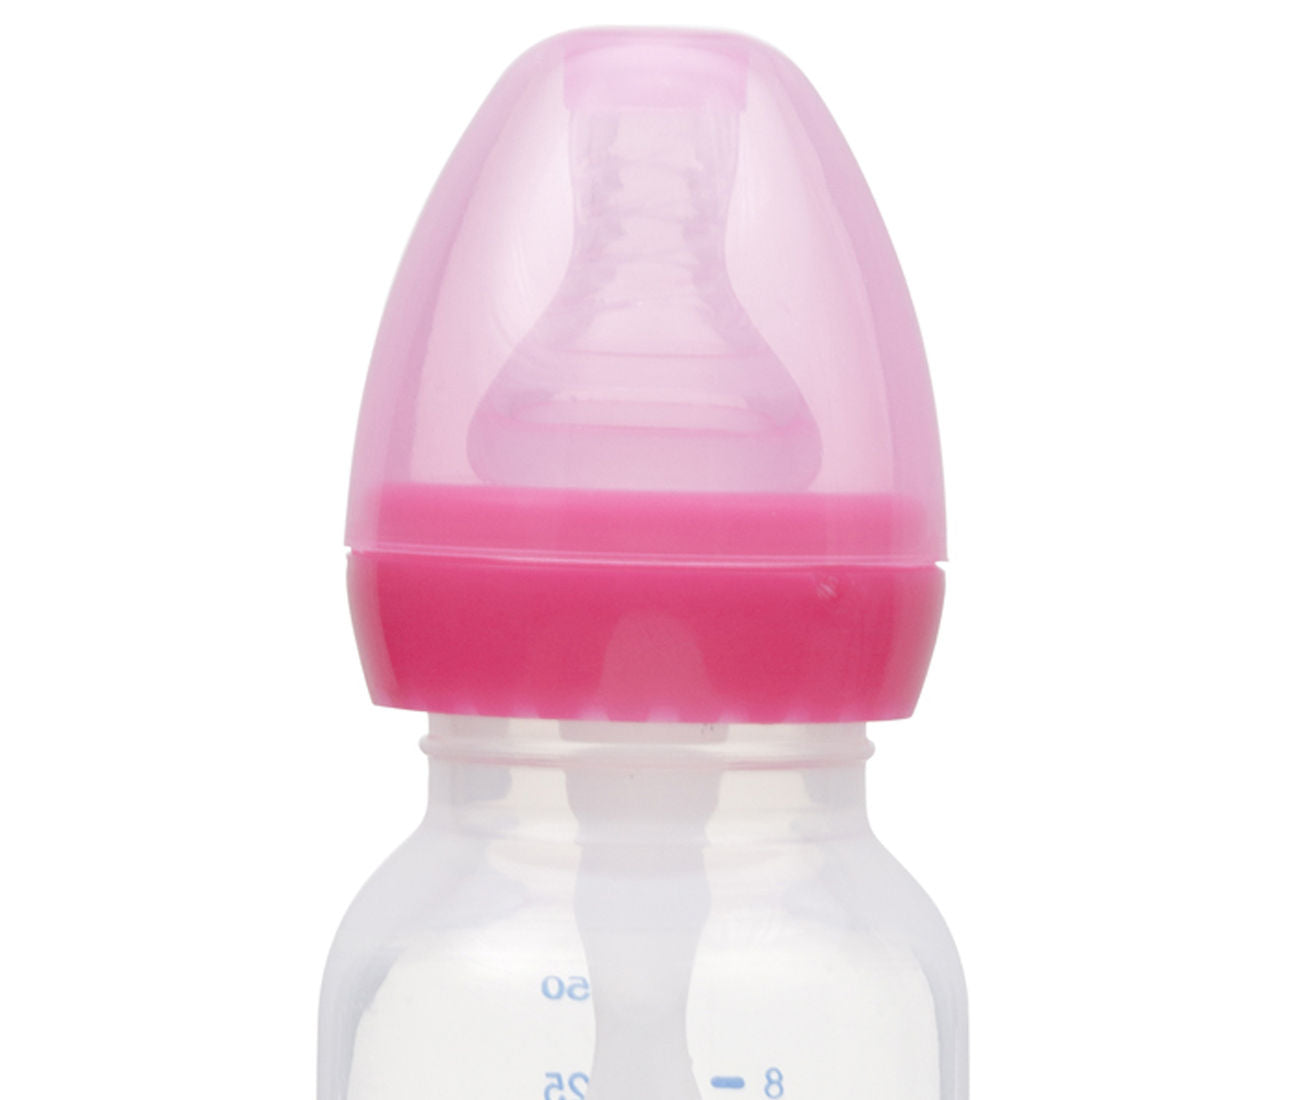 Mee  mee   Kids Baby Feeding Bottle Multifunctional Milk Feeder Bottle for Infant New born Toddler   2 in 1 Bottle With Spoon BPA Free  125 ml 3+Months